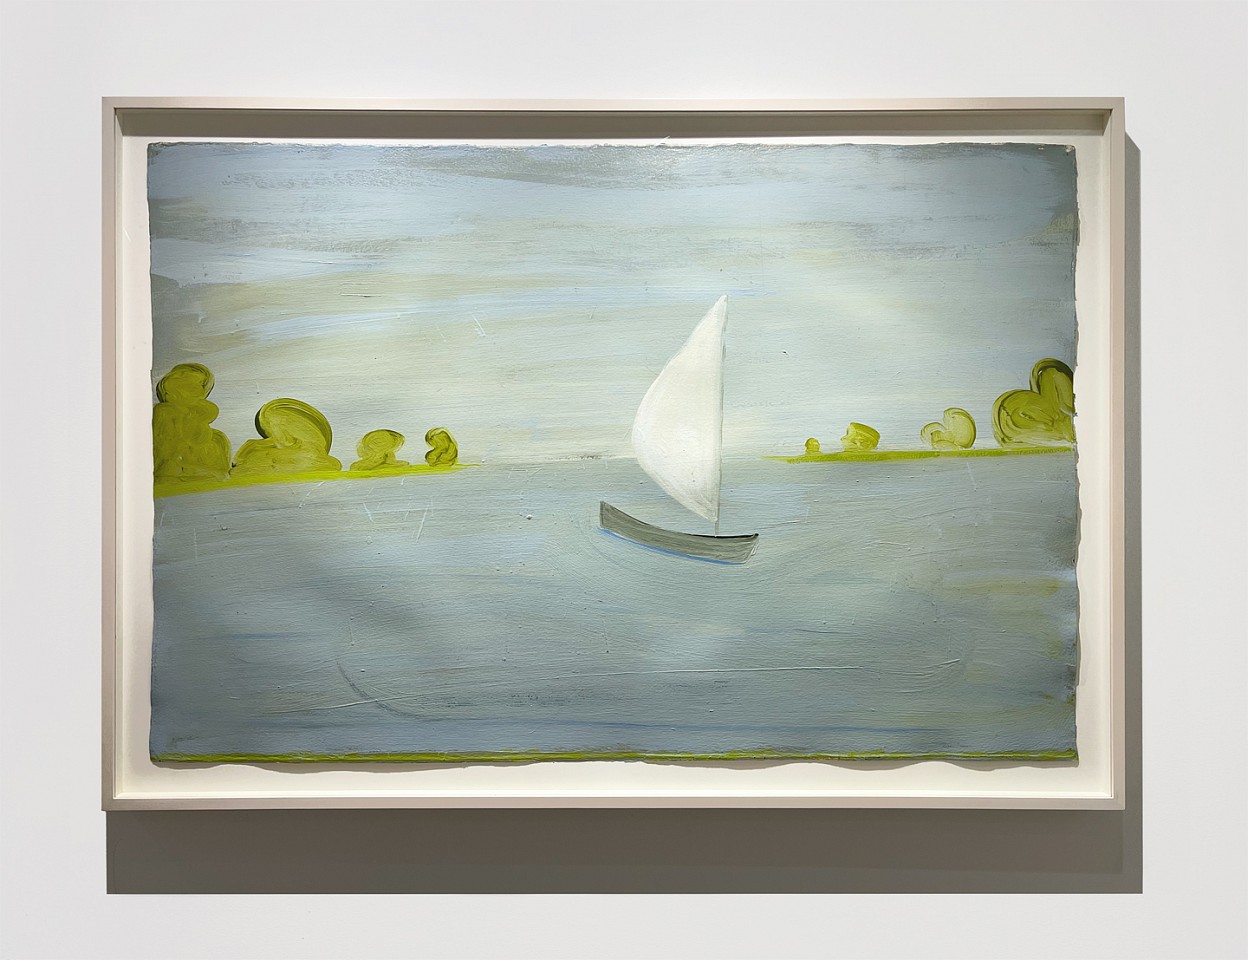 Kathryn Lynch
Coecles Harbor, 2012
LYN501
oil on paper, 39 x 59 inches